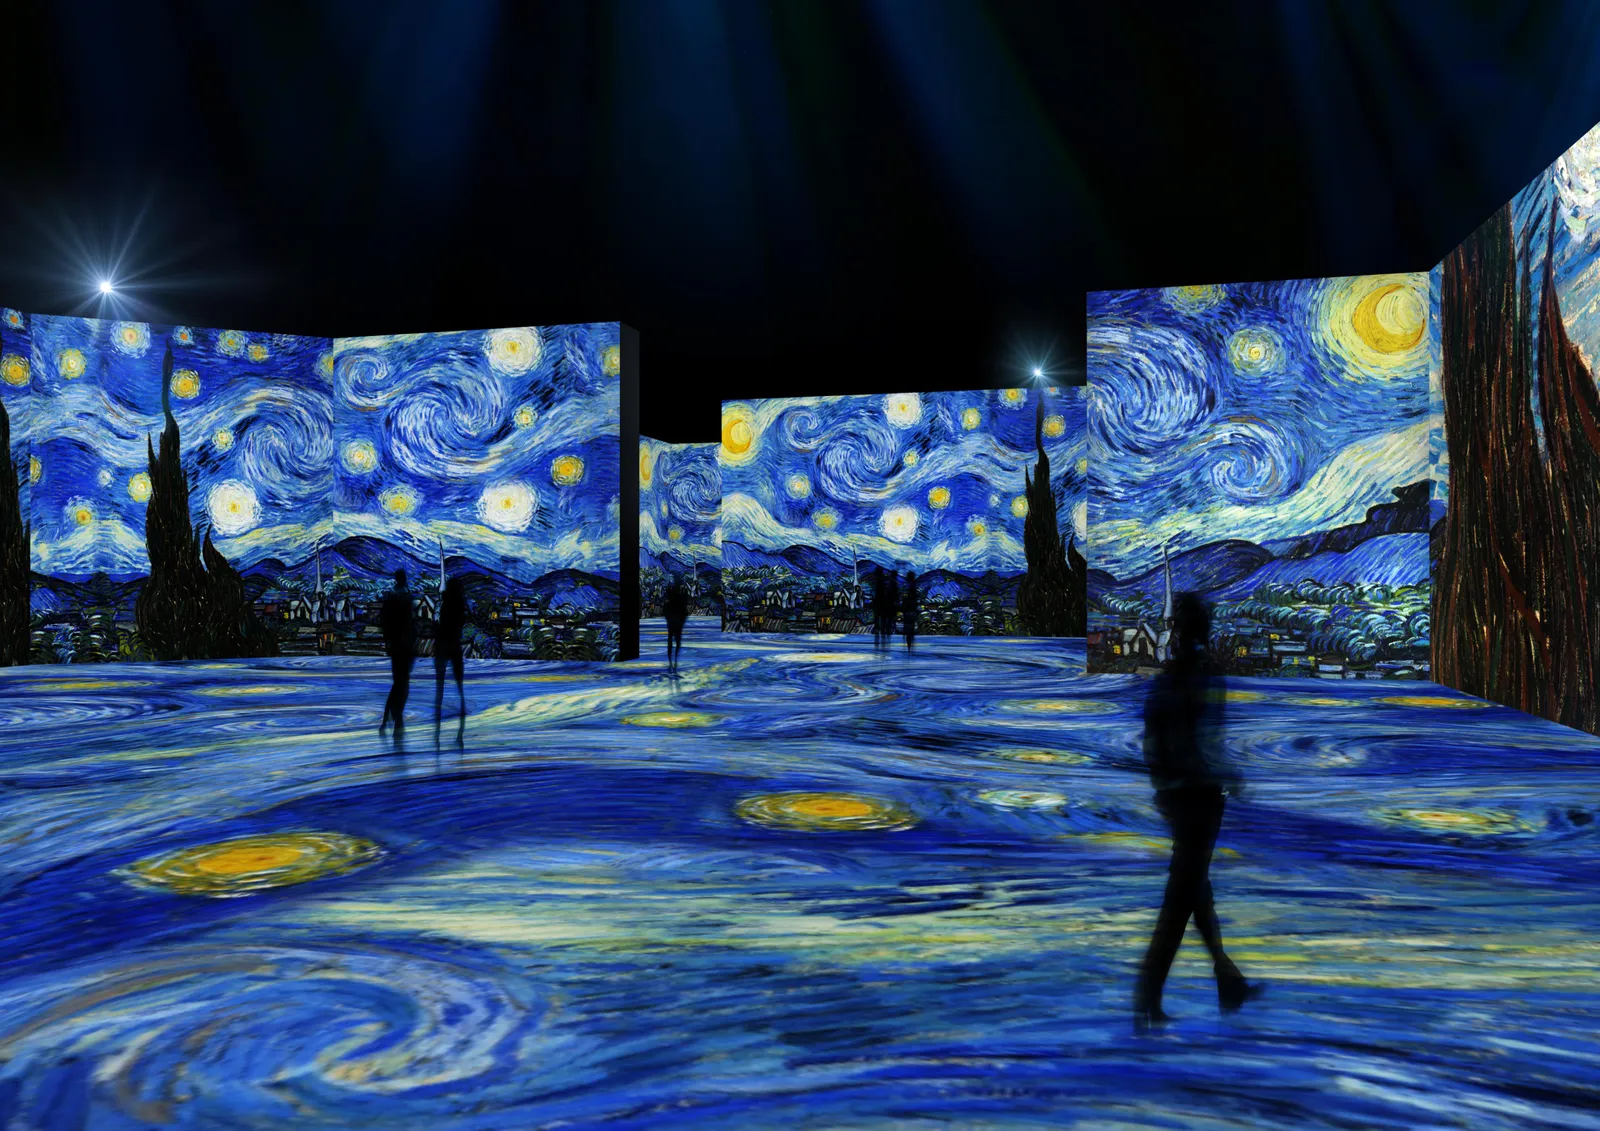 Medicom Toy Vincent Van Gogh The Starry Night By Kazs Shop